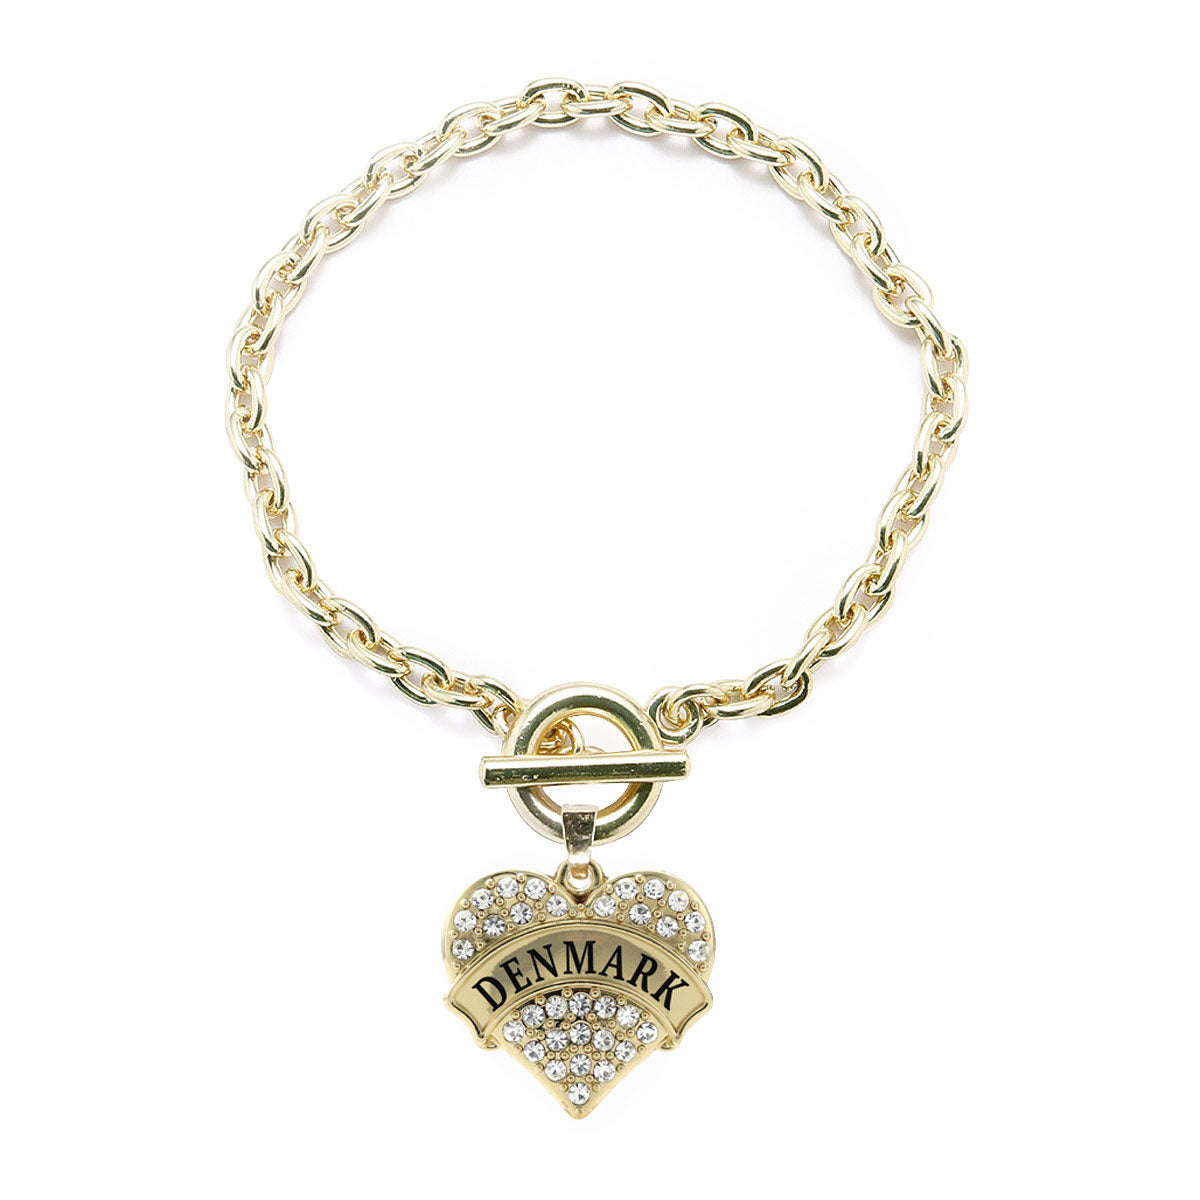 Gold Denmark Pave Heart Charm Toggle Bracelet